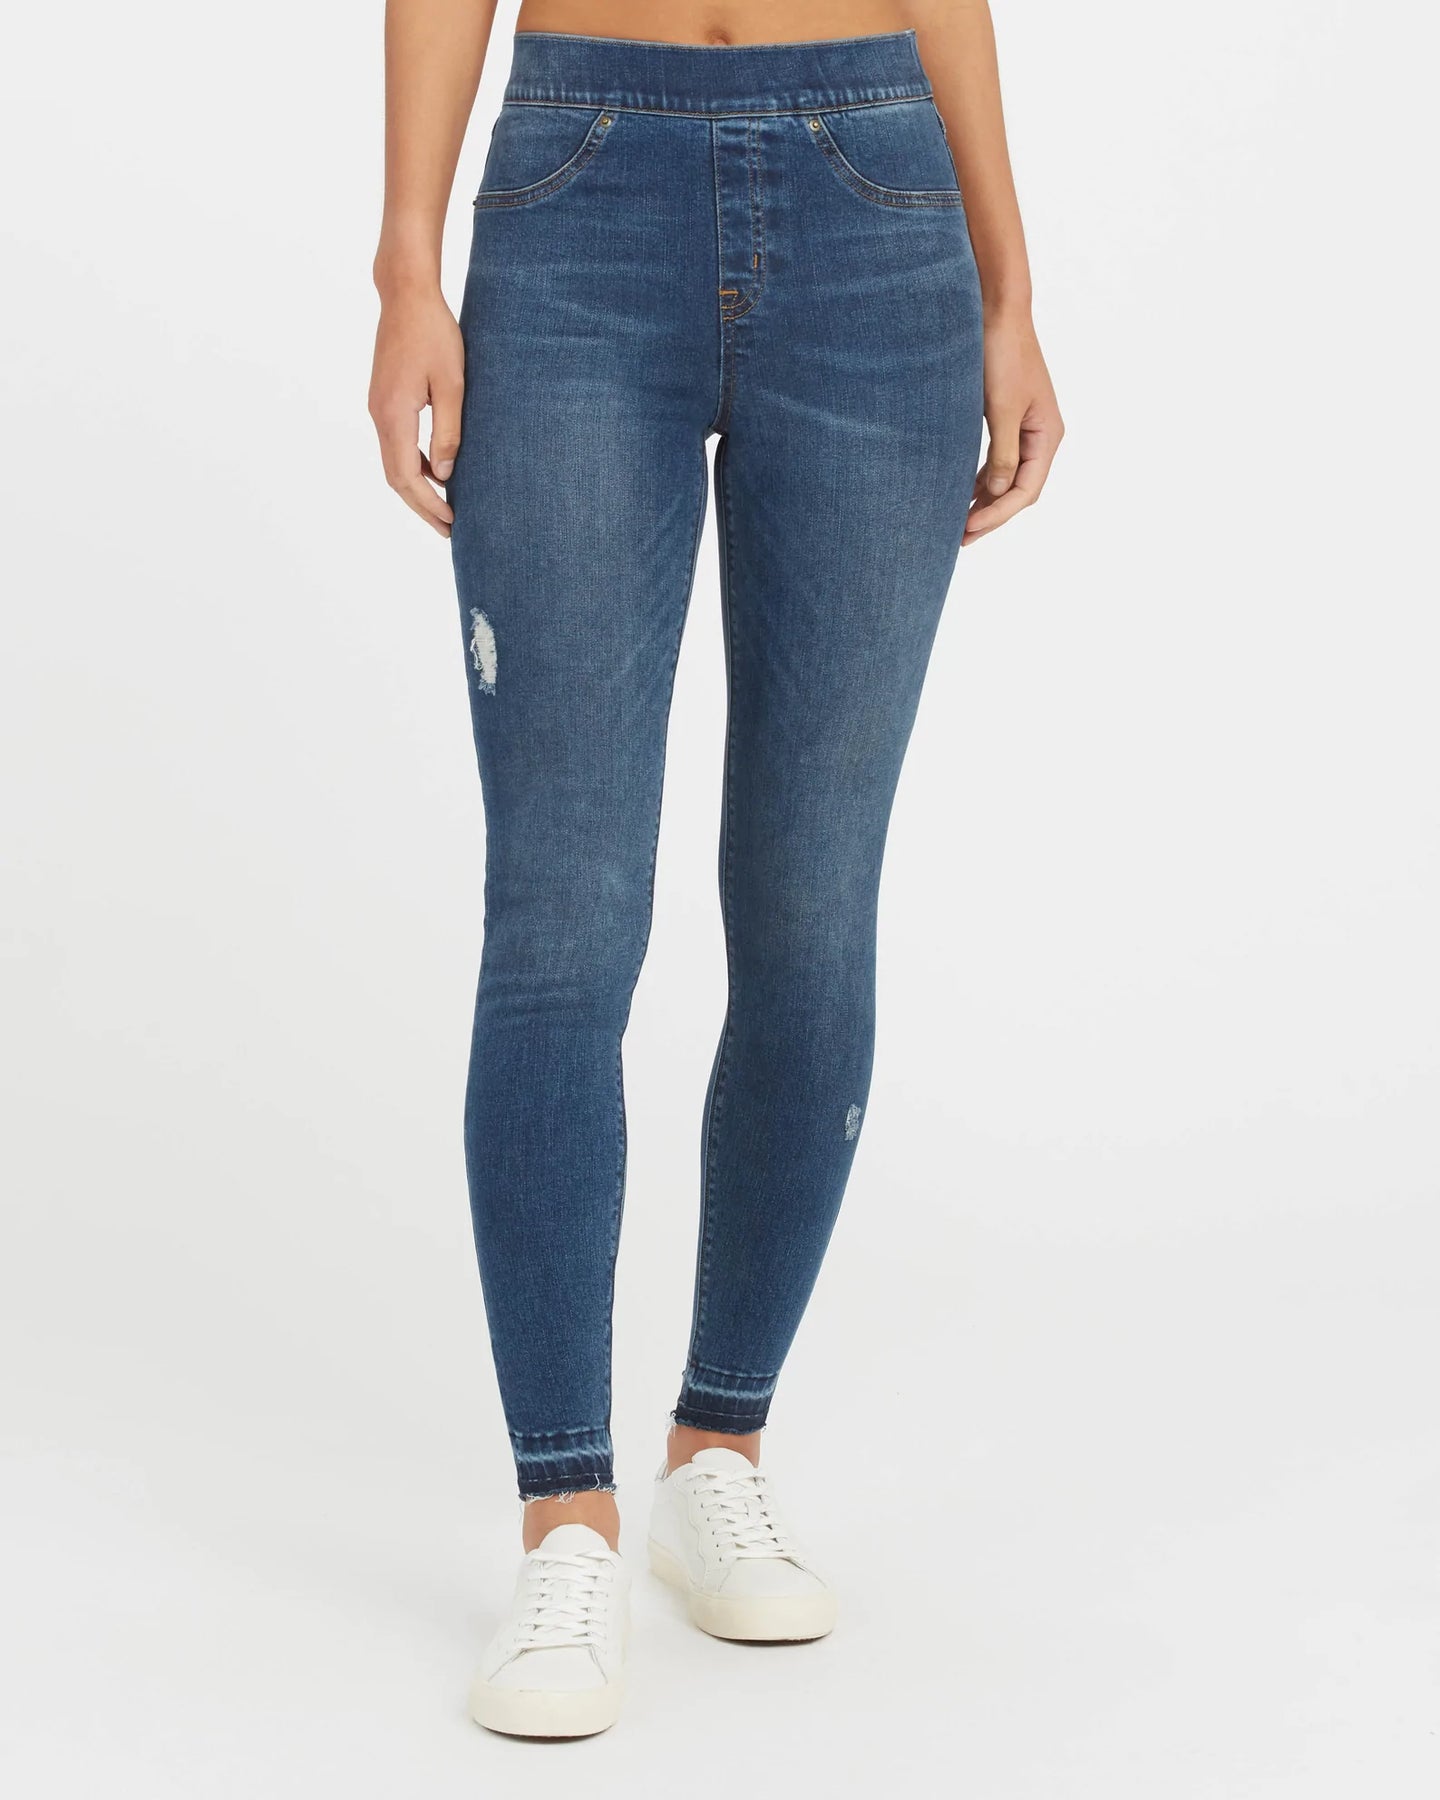 SPANX, Pants & Jumpsuits, Spanx Distressed Ankle Skinny Jeans Medium Wash  Large Petite